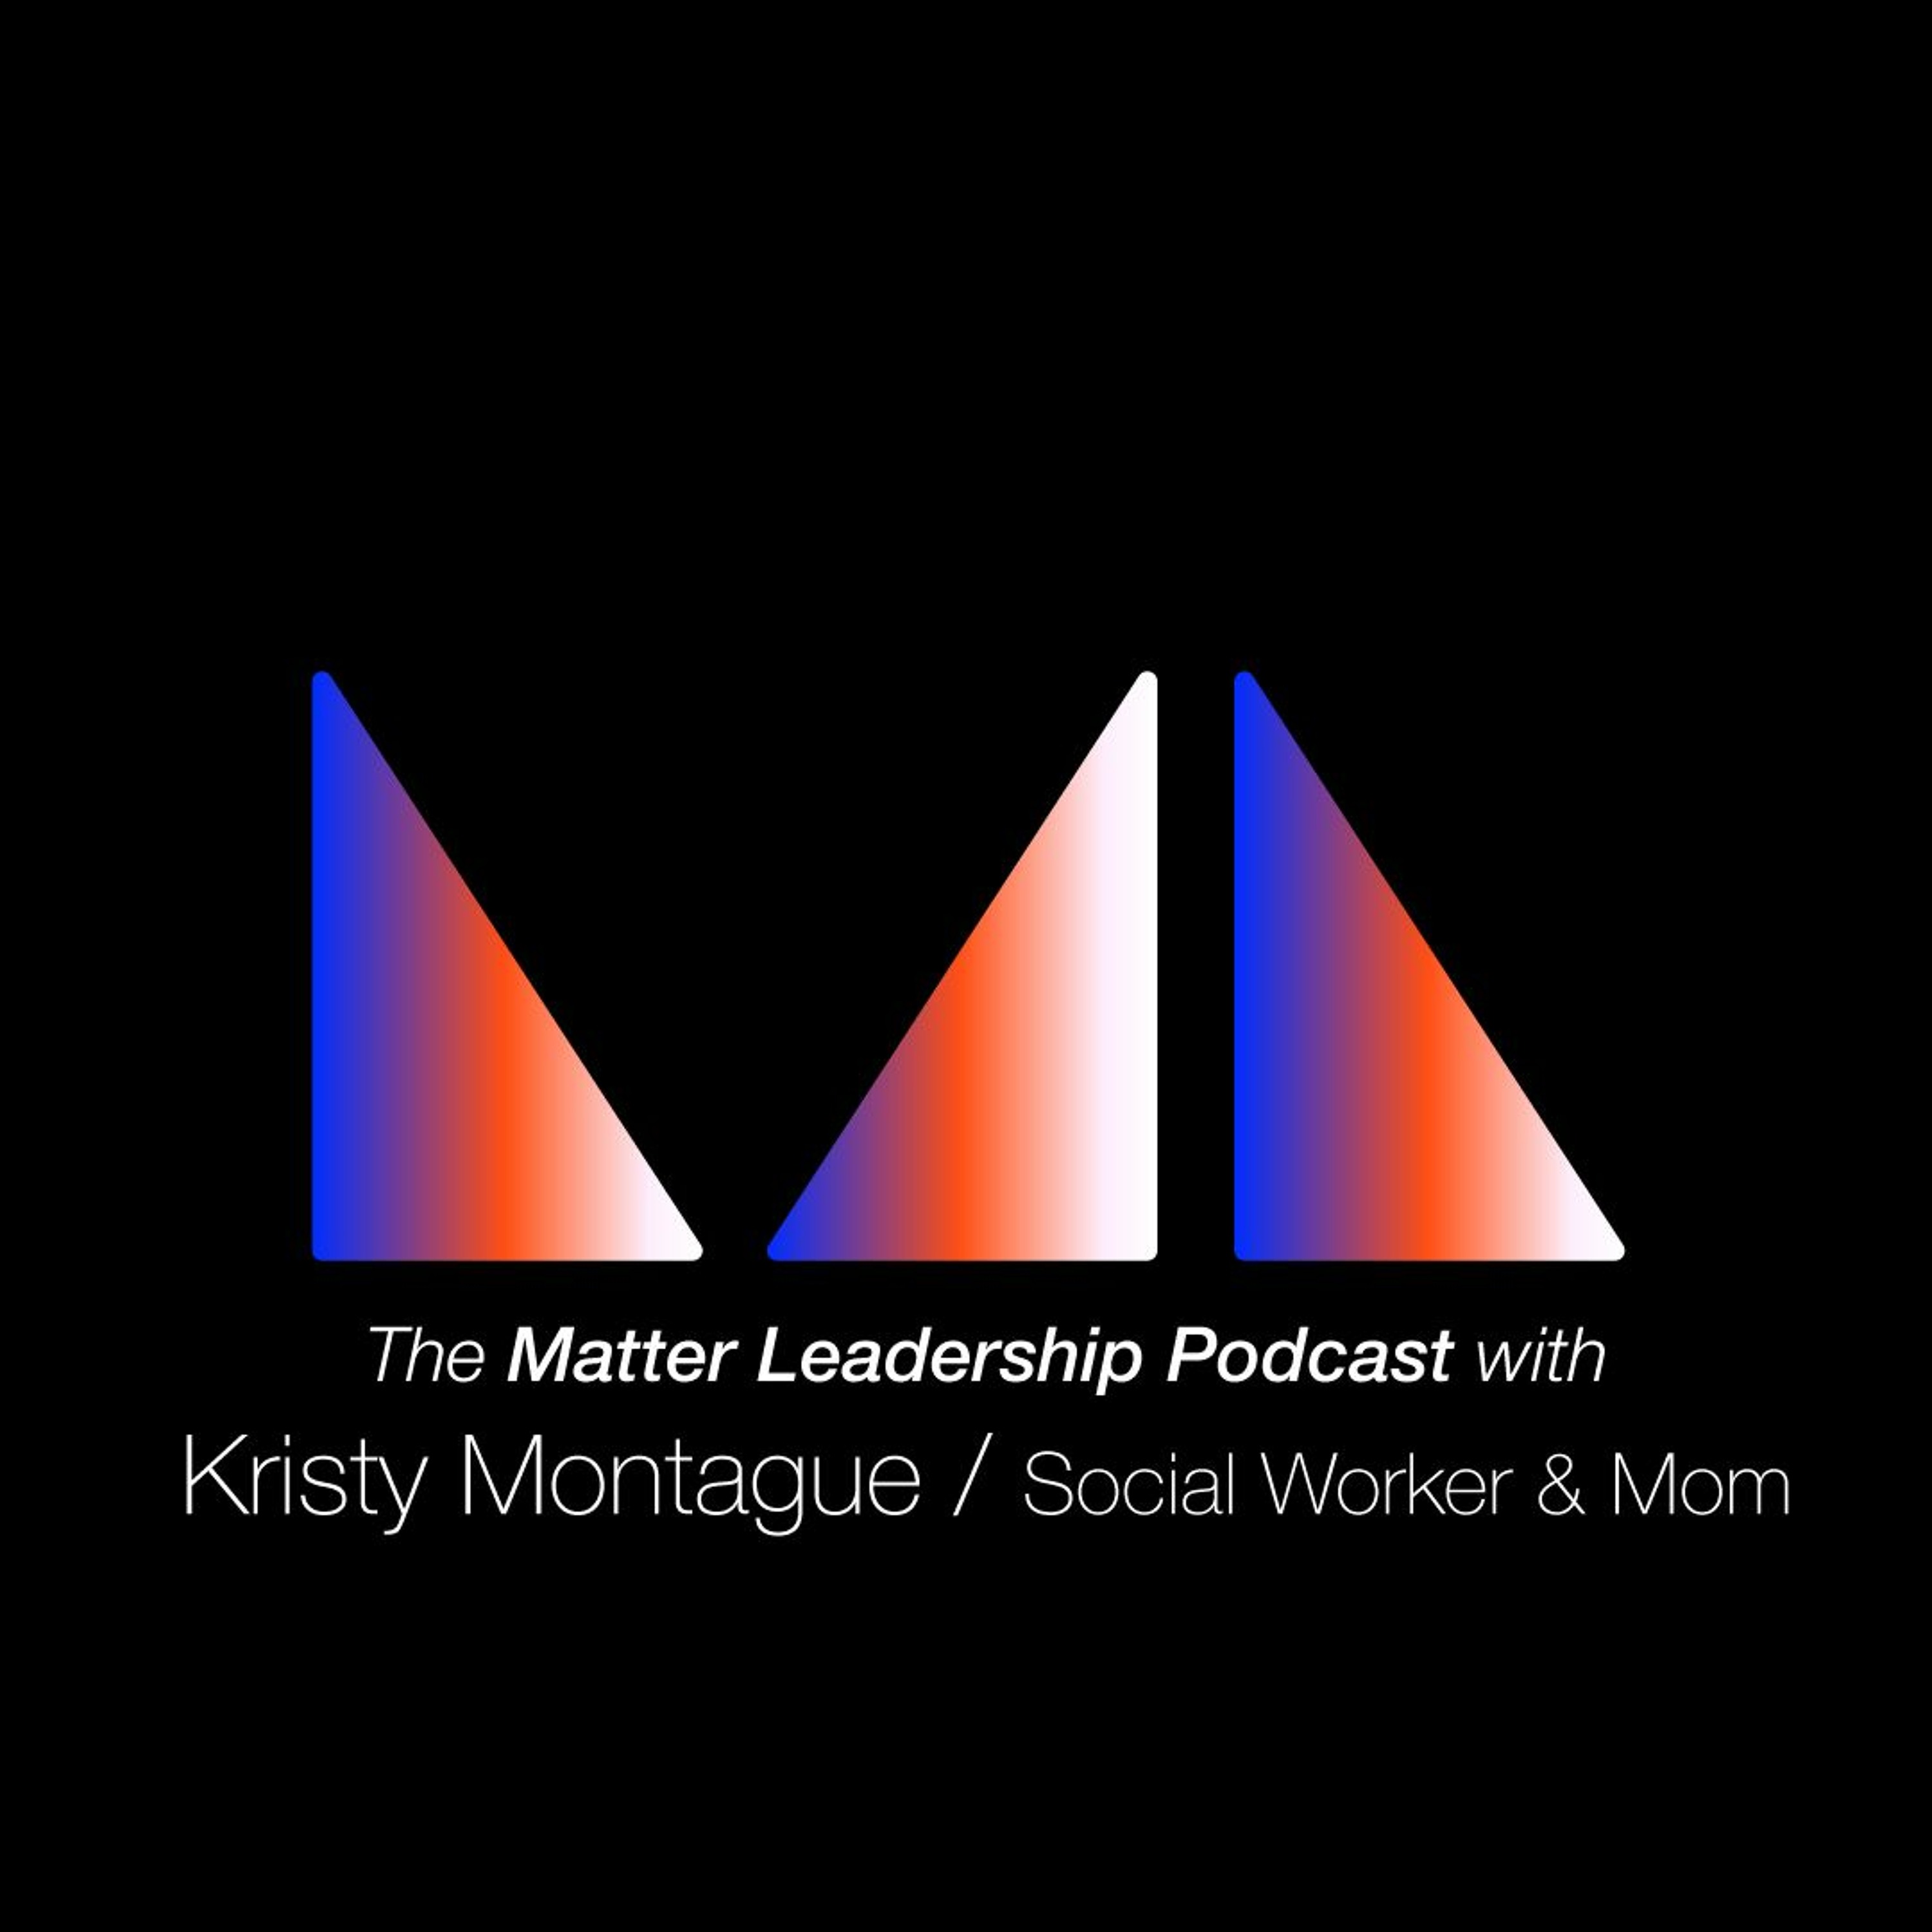 The Matter Leadership Podcast: Kristy Montague / Social Worker & Mom